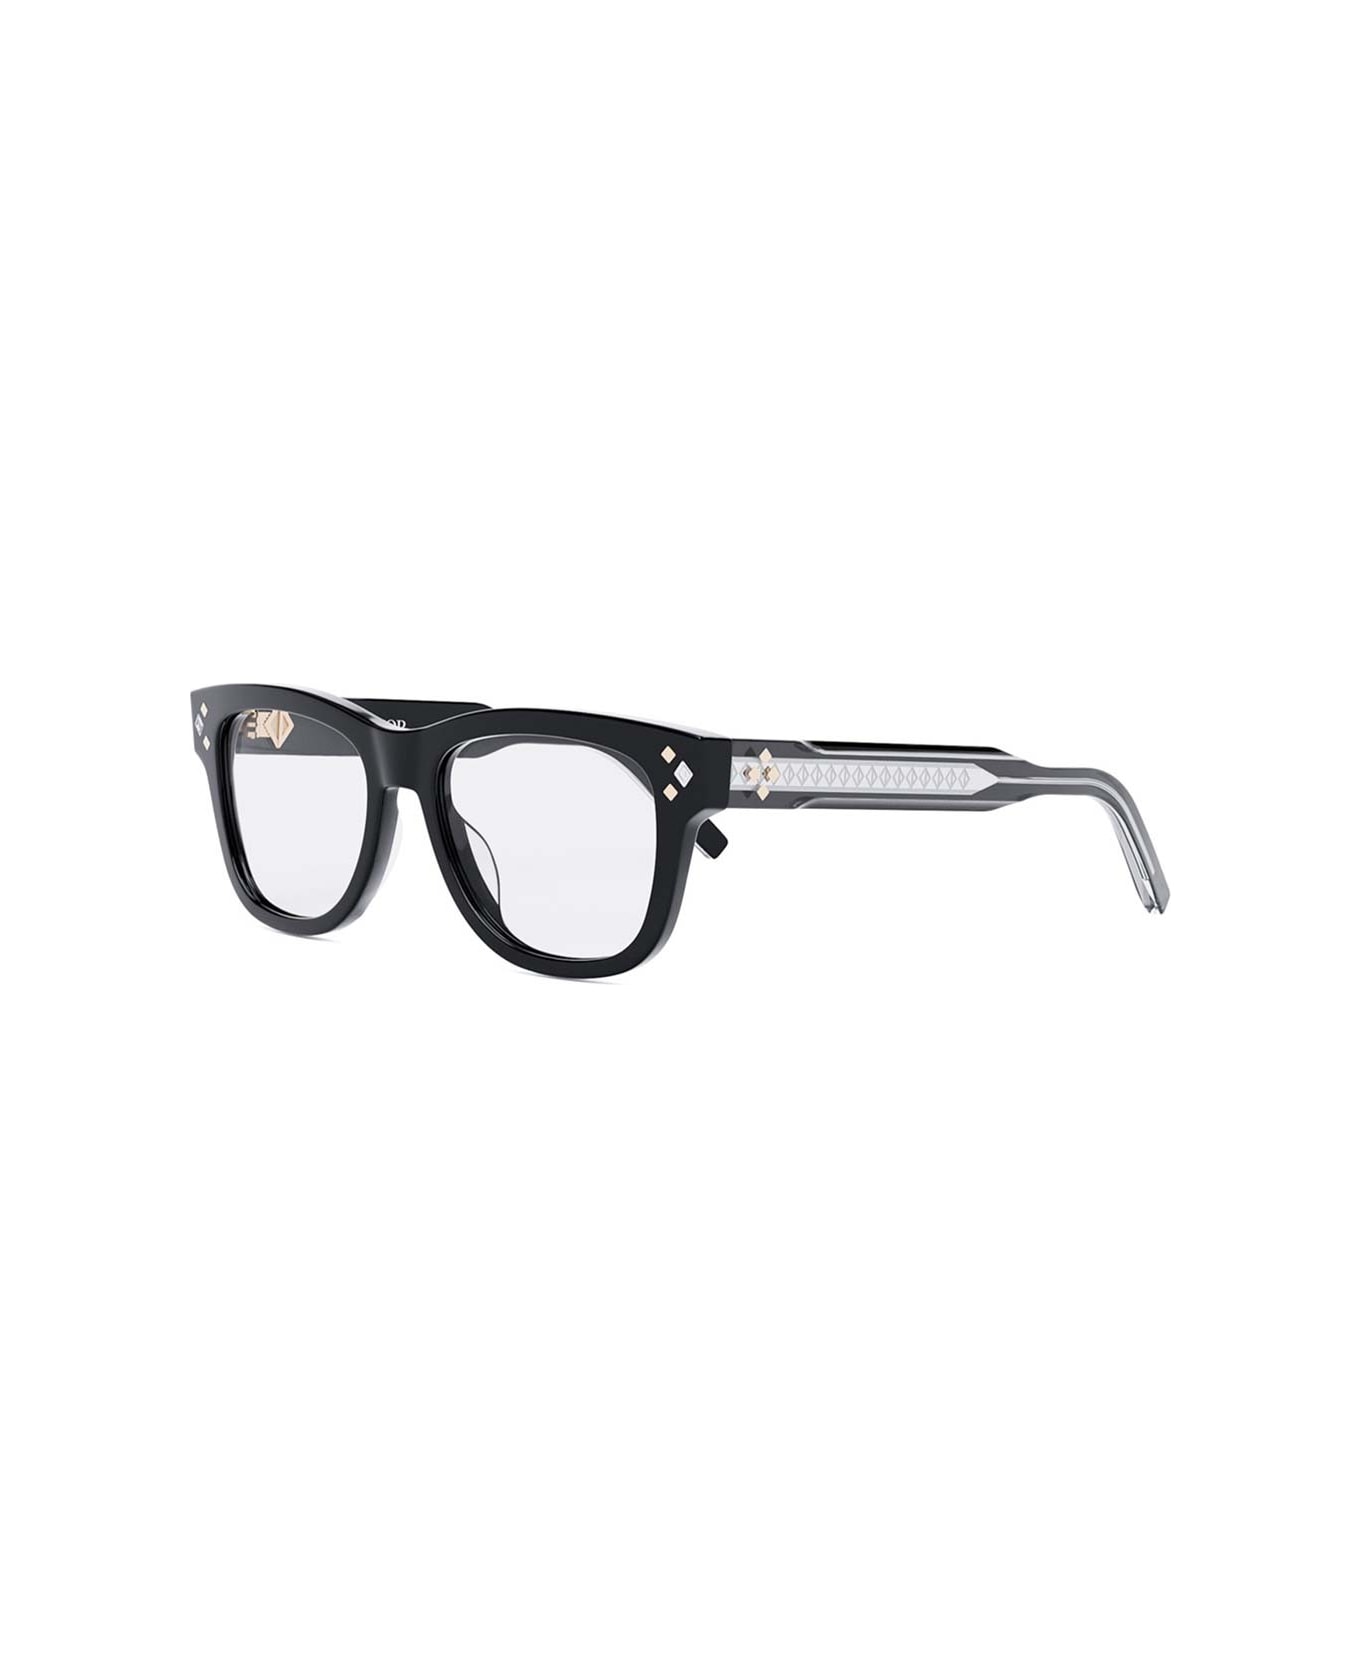 Dior Eyewear Glasses - Nero